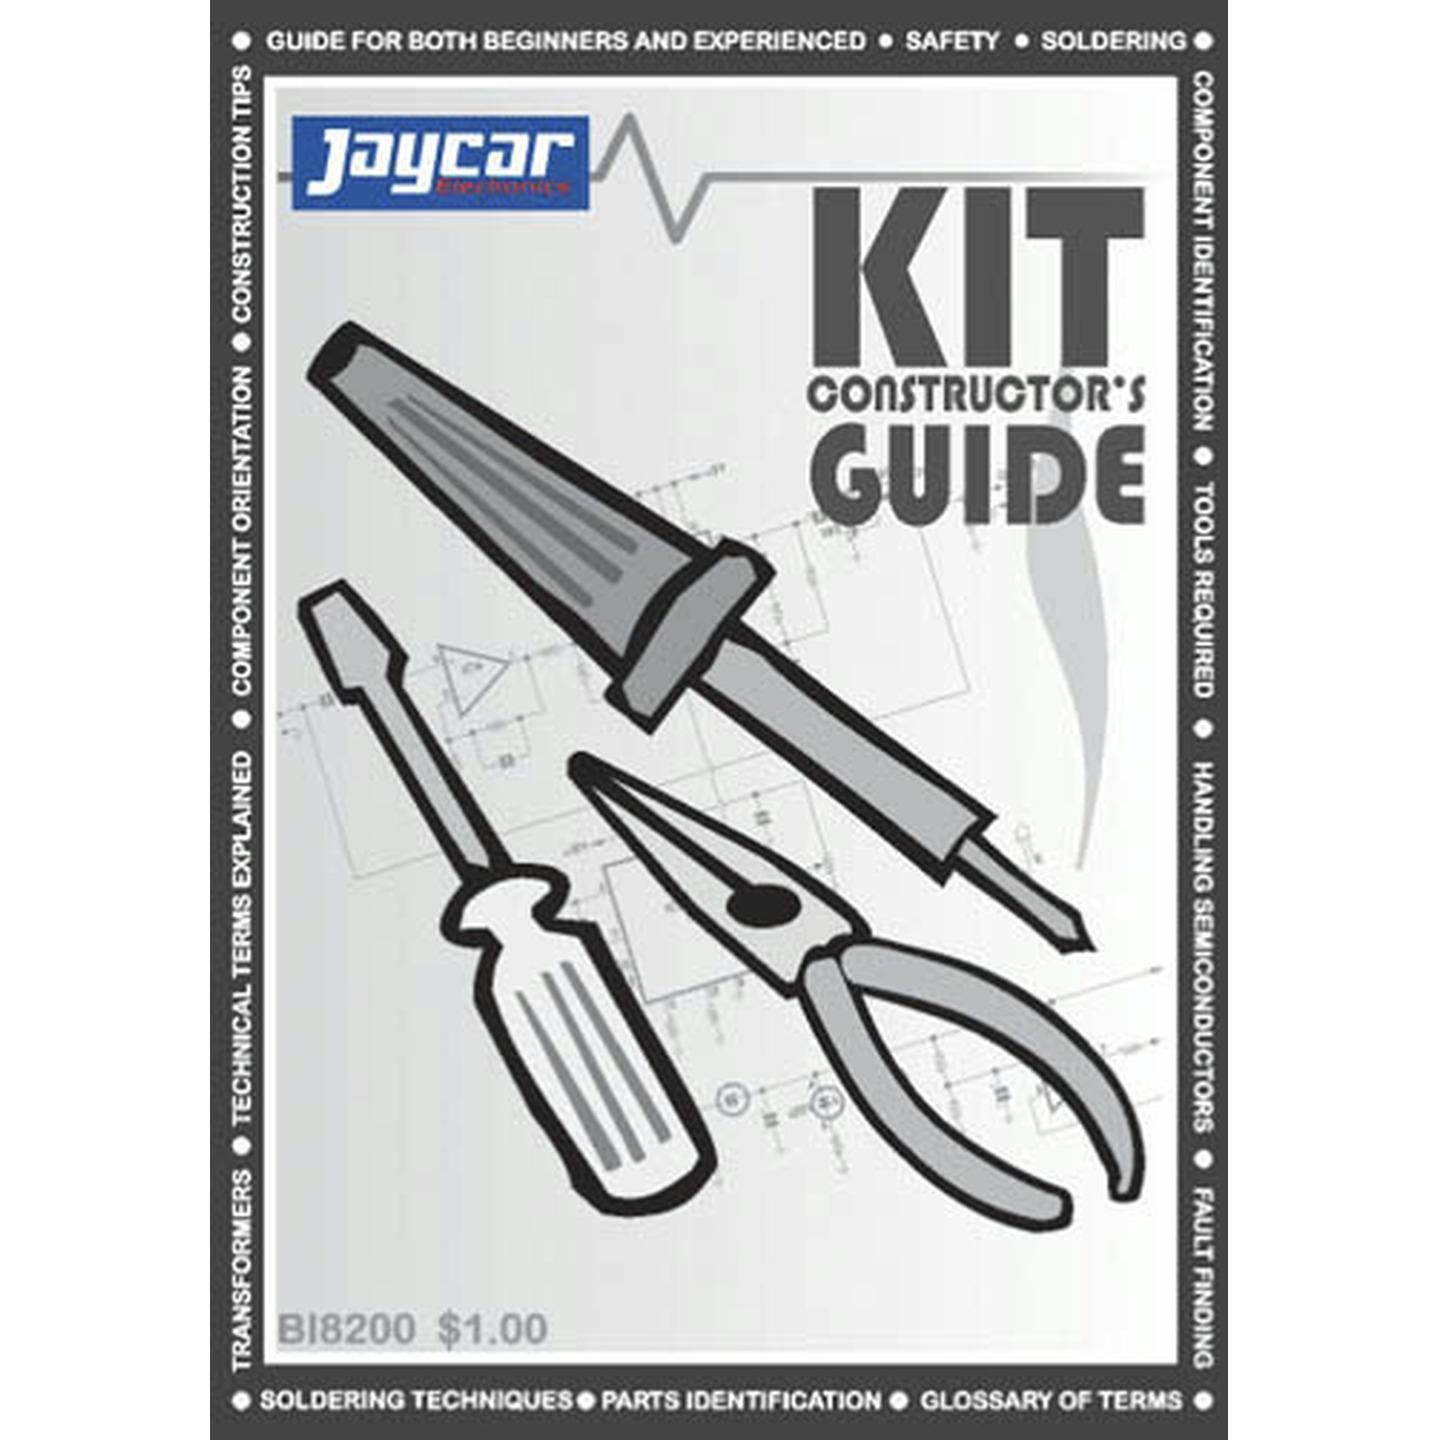 Kit Constructors Manual / Construction Guide